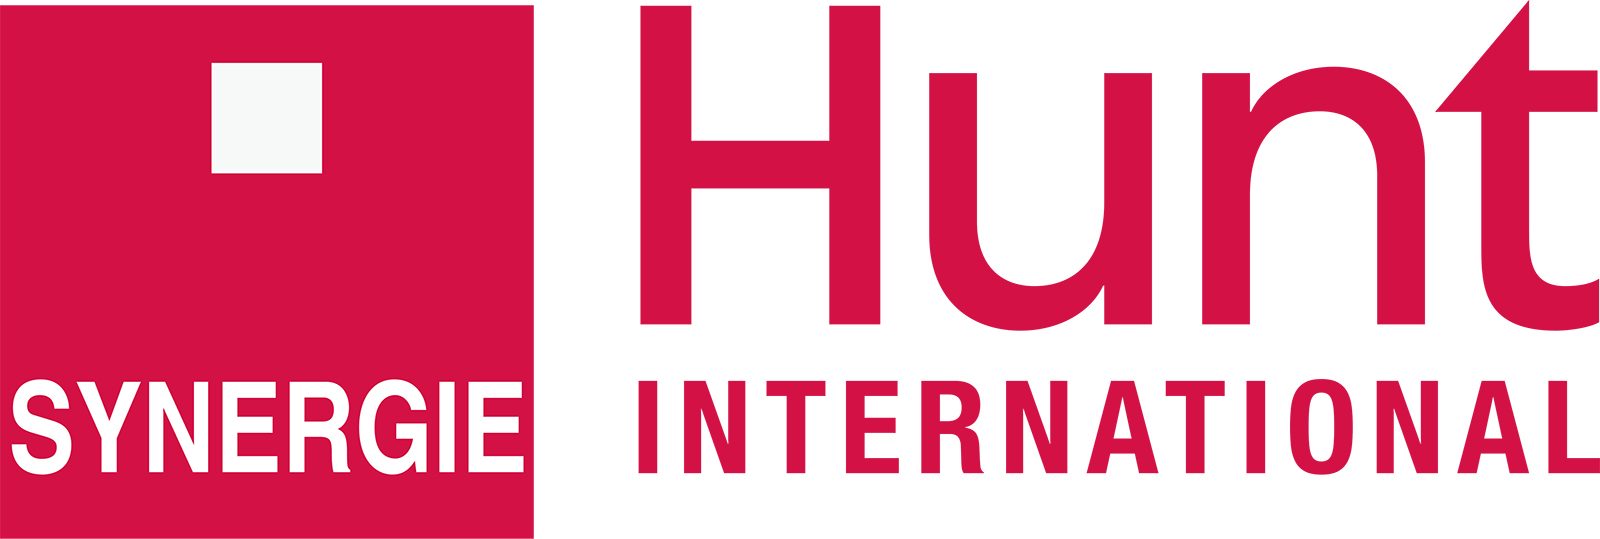 Synergie Hunt International